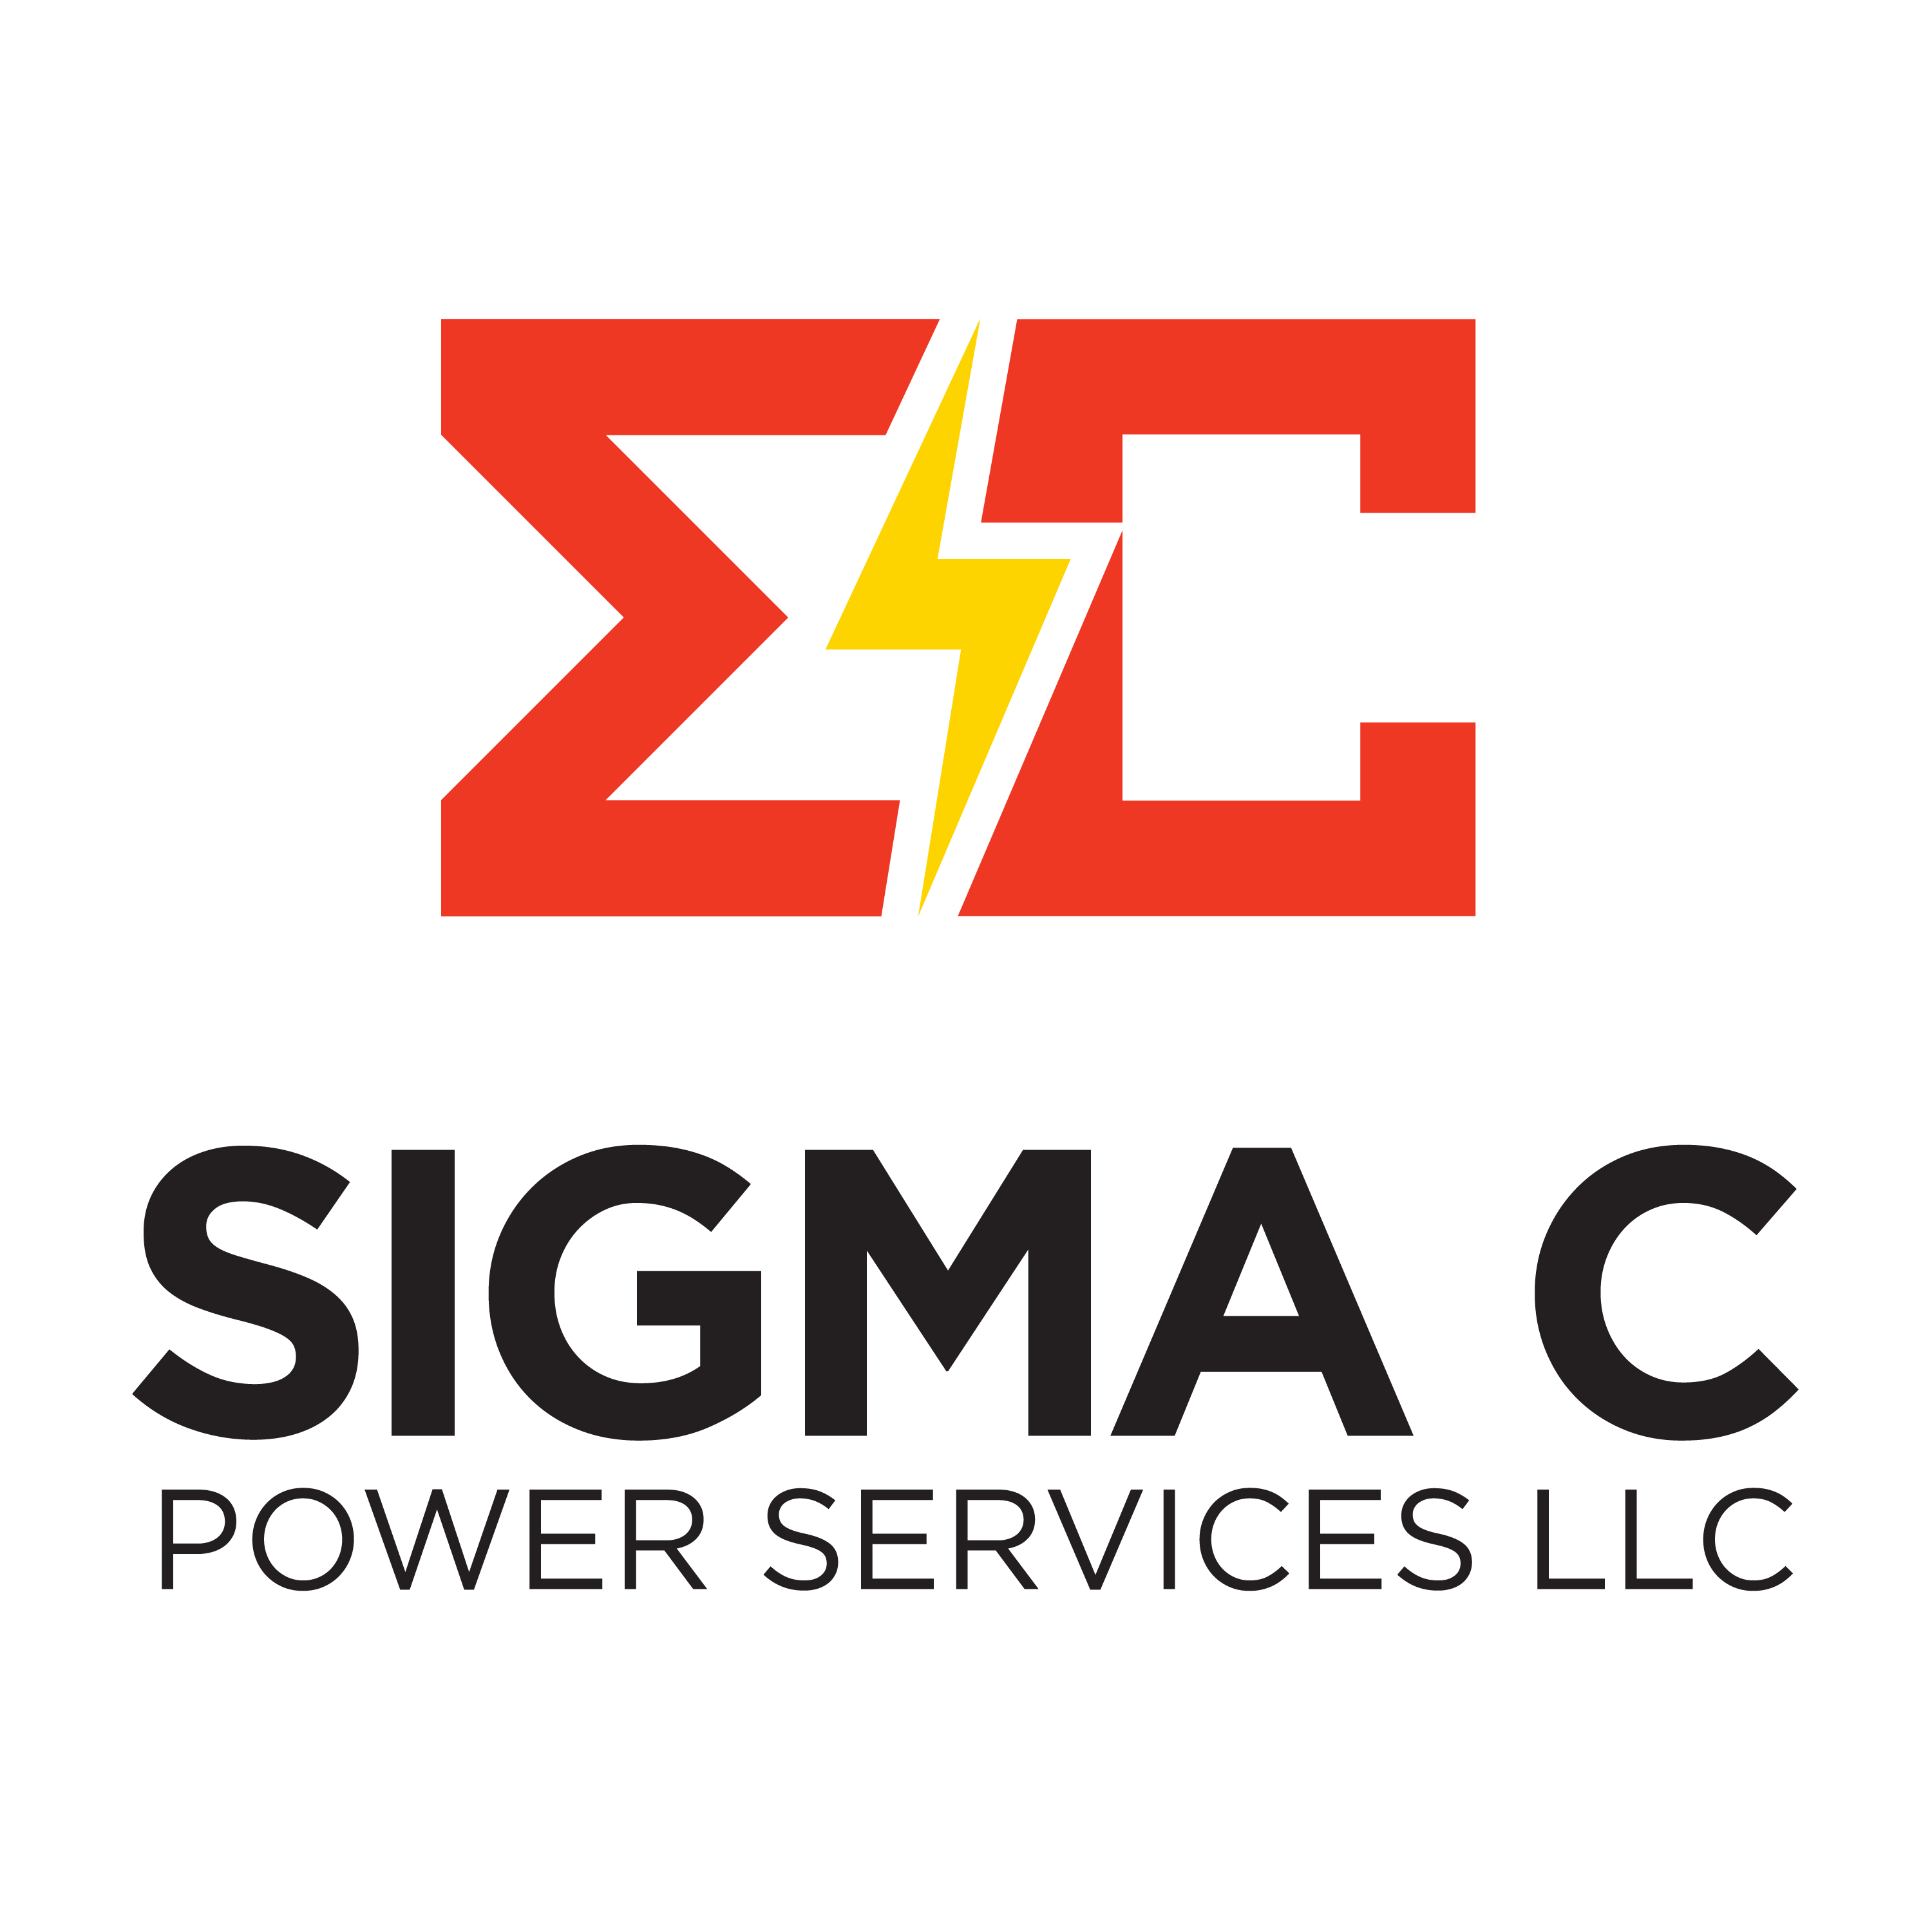 Sigma C Power Services